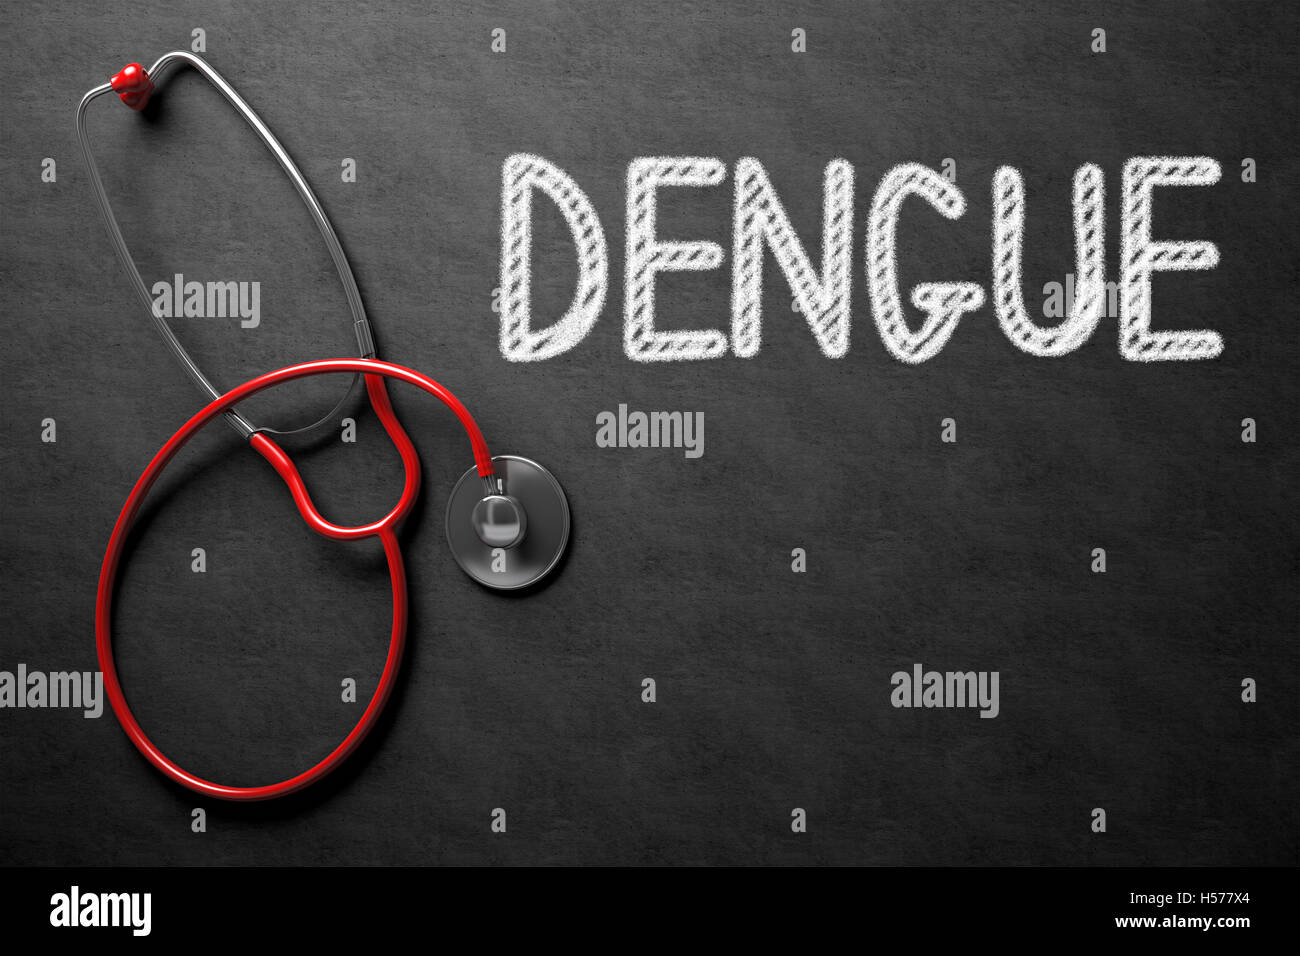 Dengue - Text on Chalkboard. 3D Illustration. Stock Photo